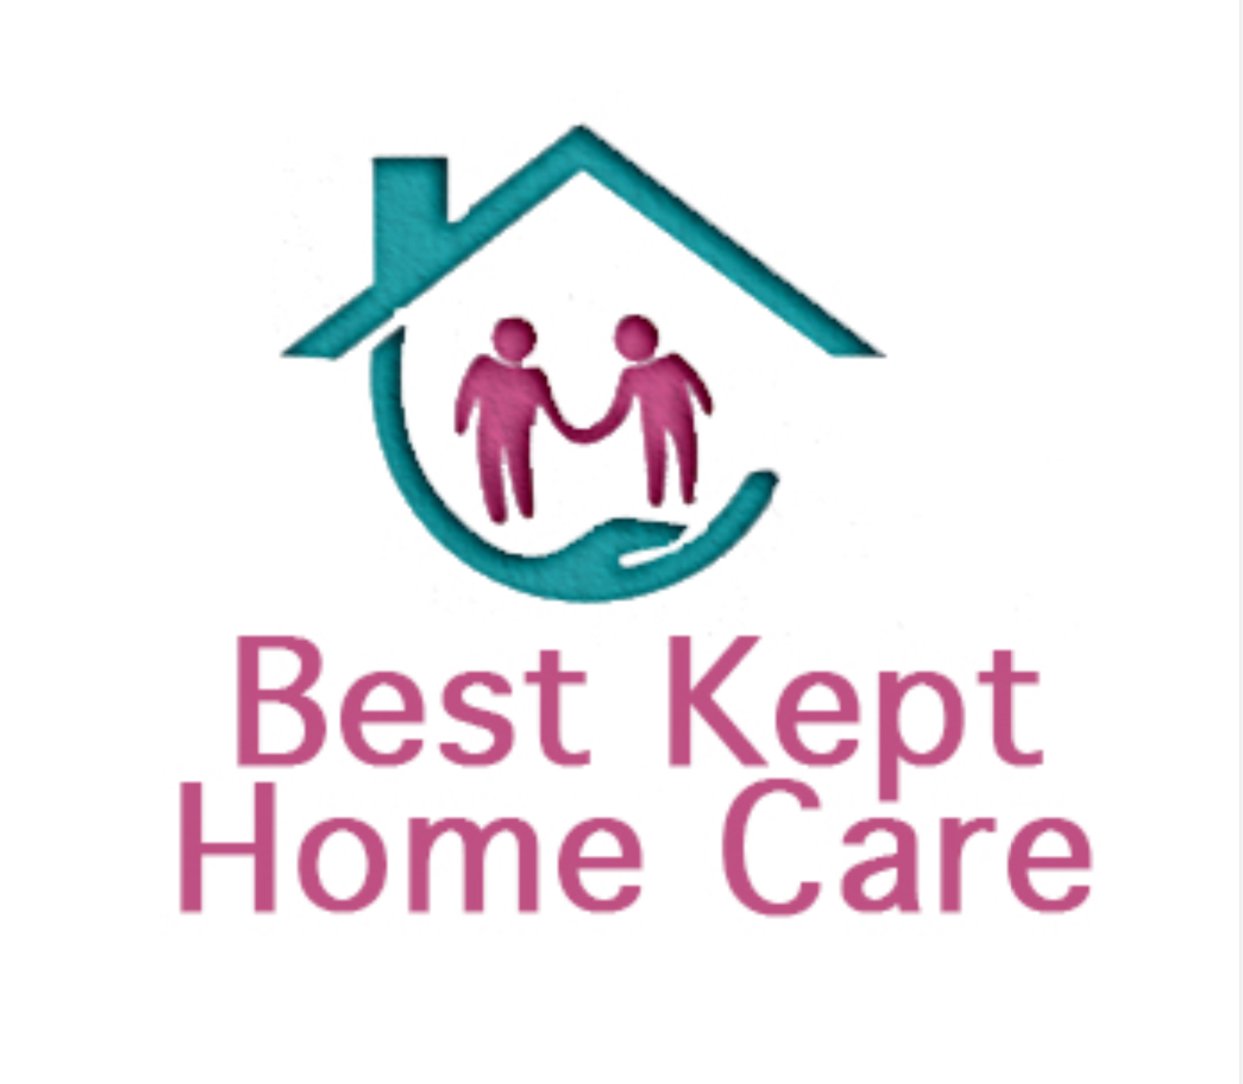 Best Kept Home Care